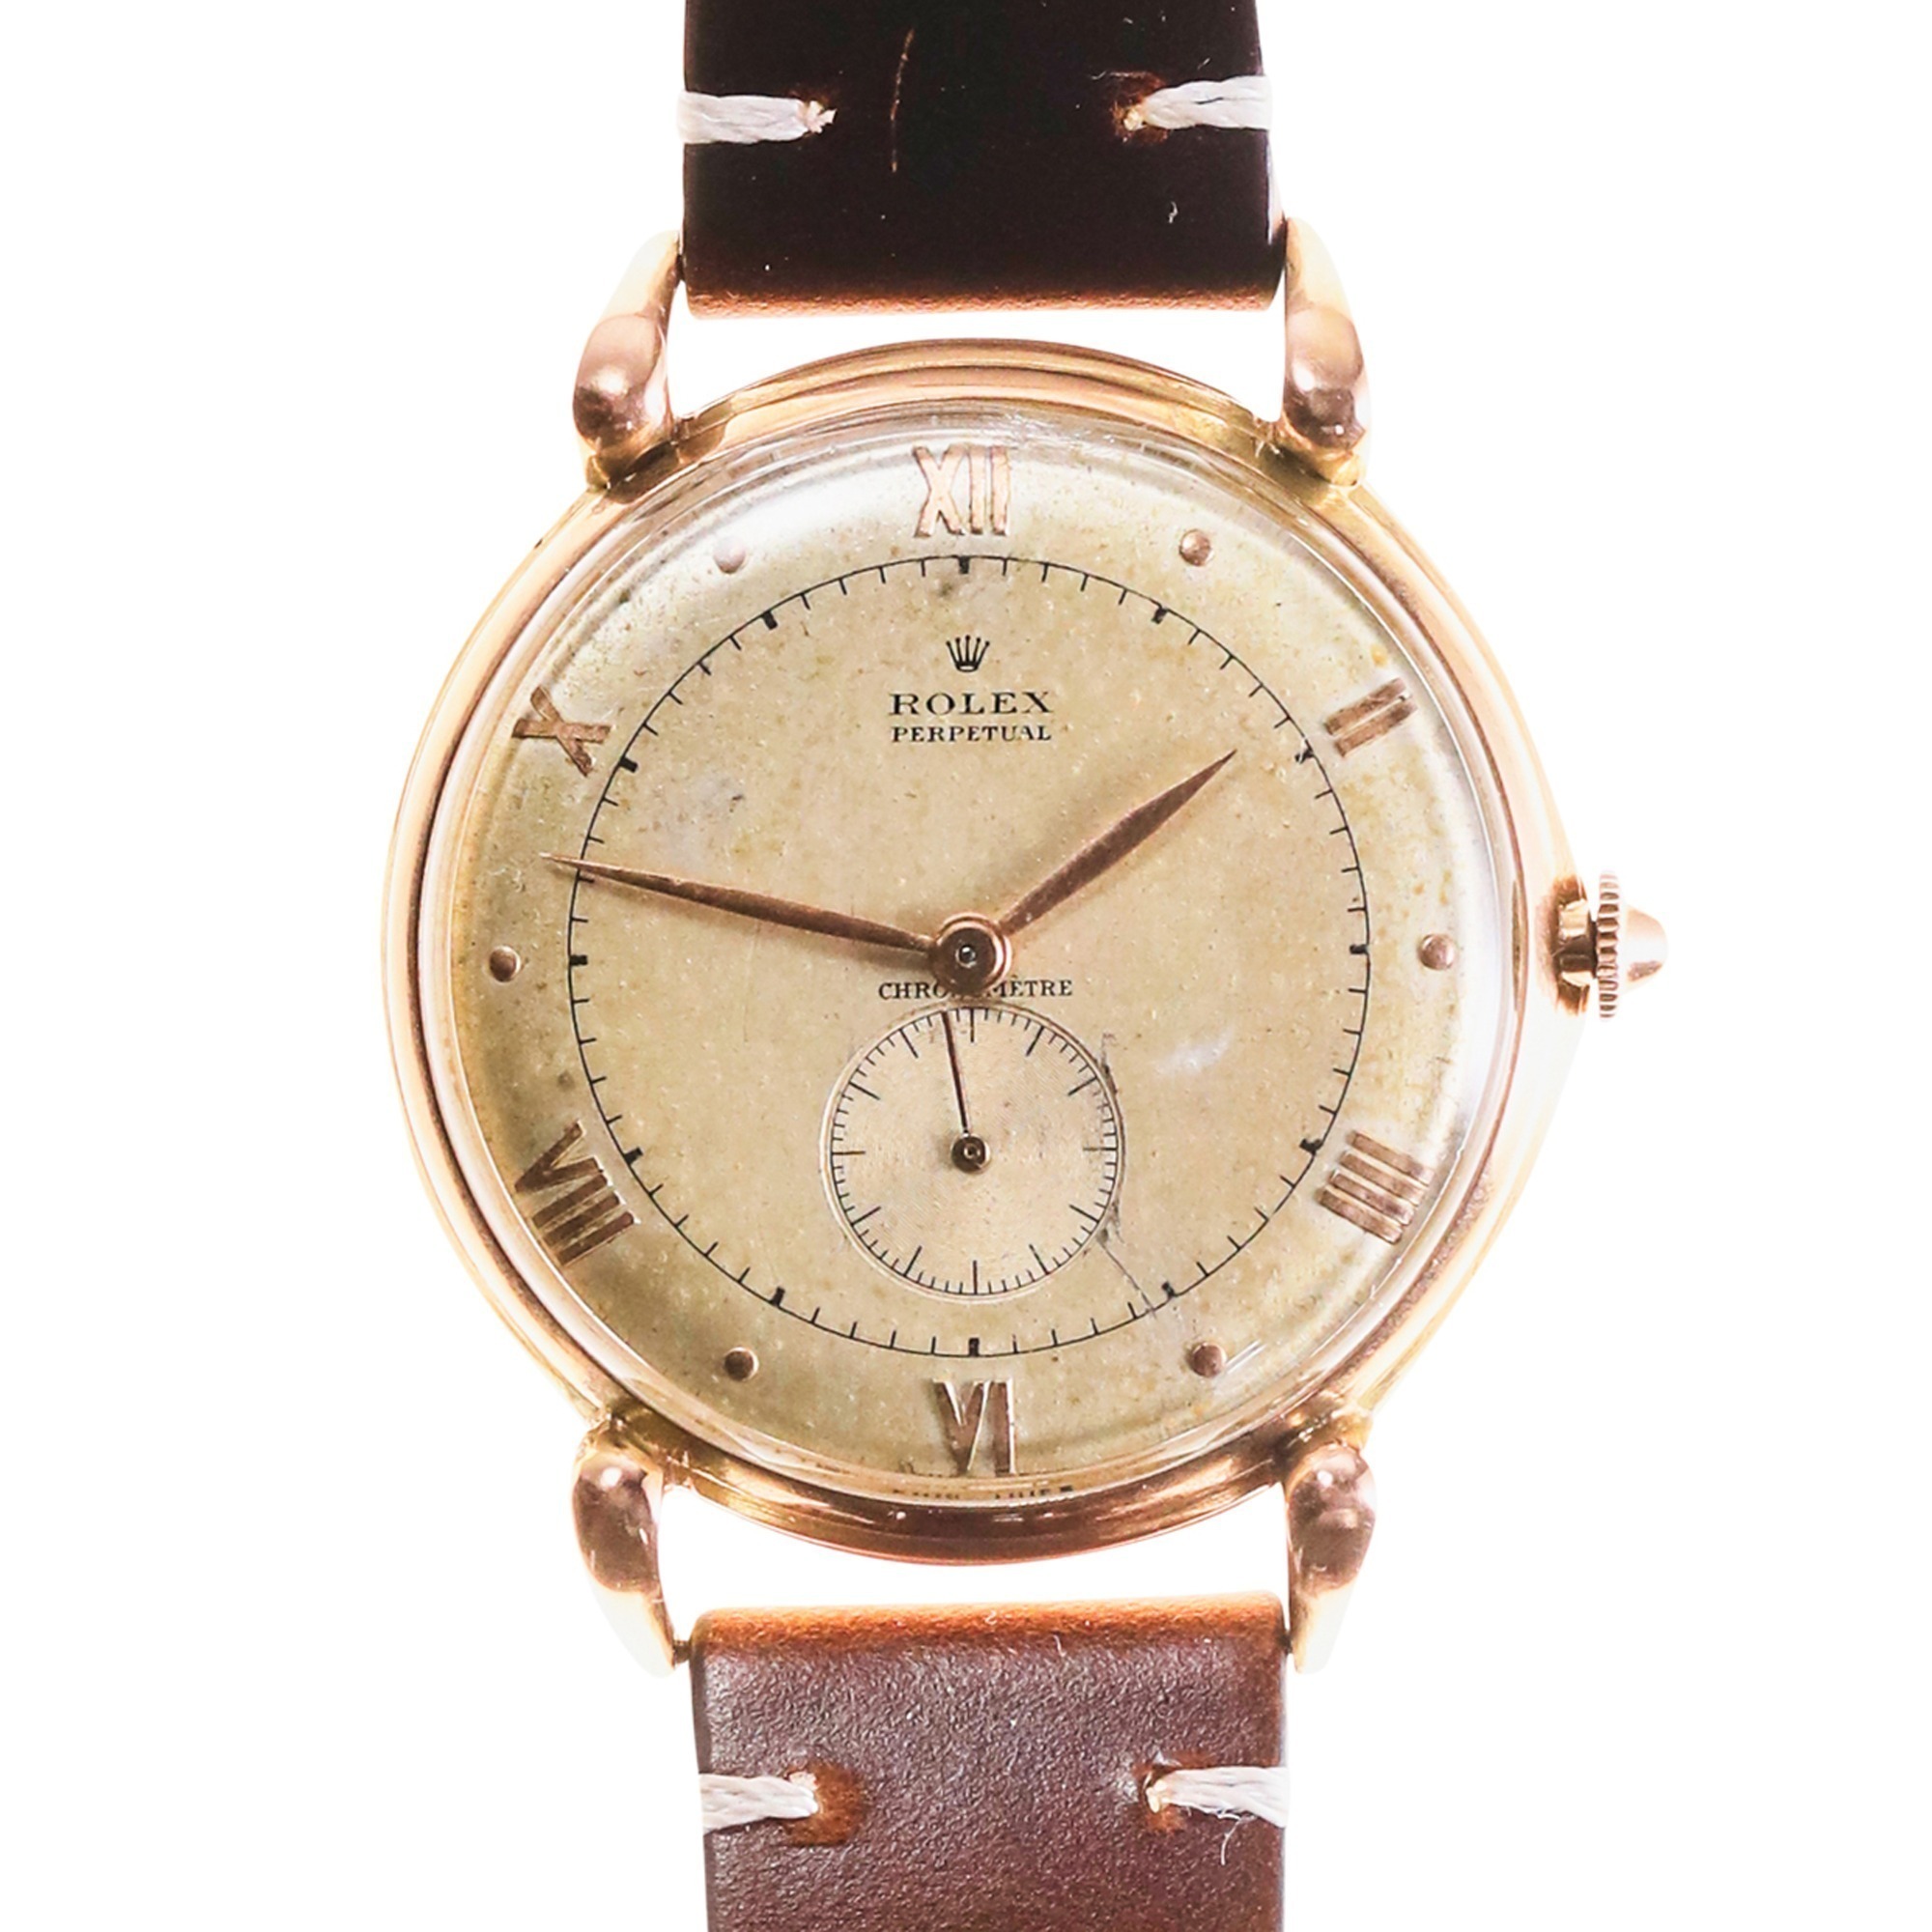 Rolex 18K Rose Gold Rare Ref 4396 Perpetual Chronometer Wristwatch